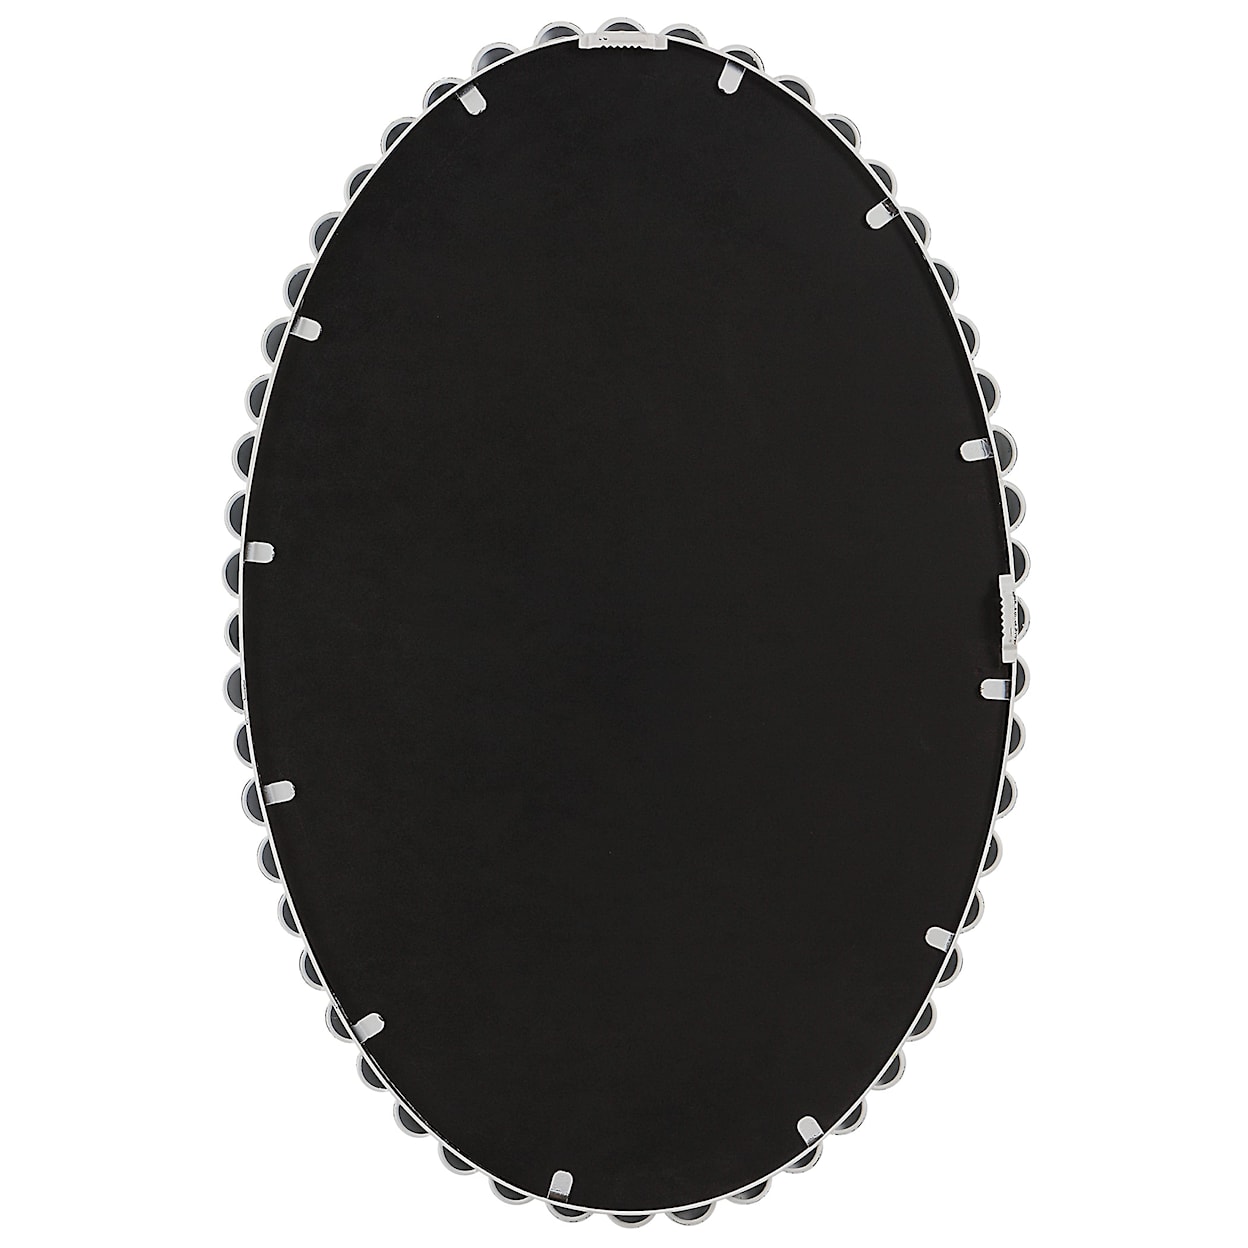 Uttermost Serna Oval Wall Mirror with White Mirror Trim